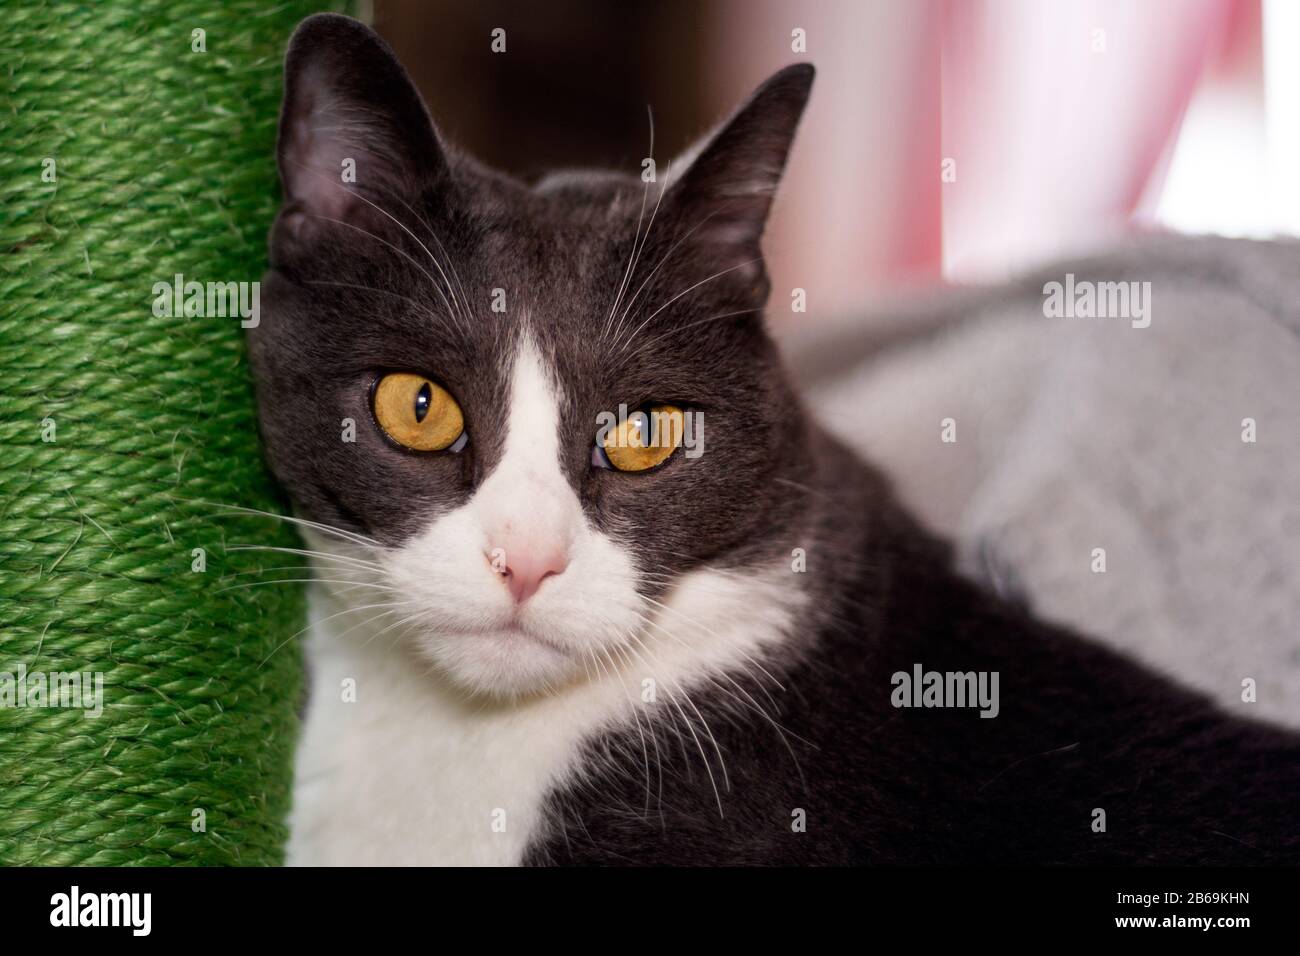 beautiful portrait of a grumpy cat Stock Photo